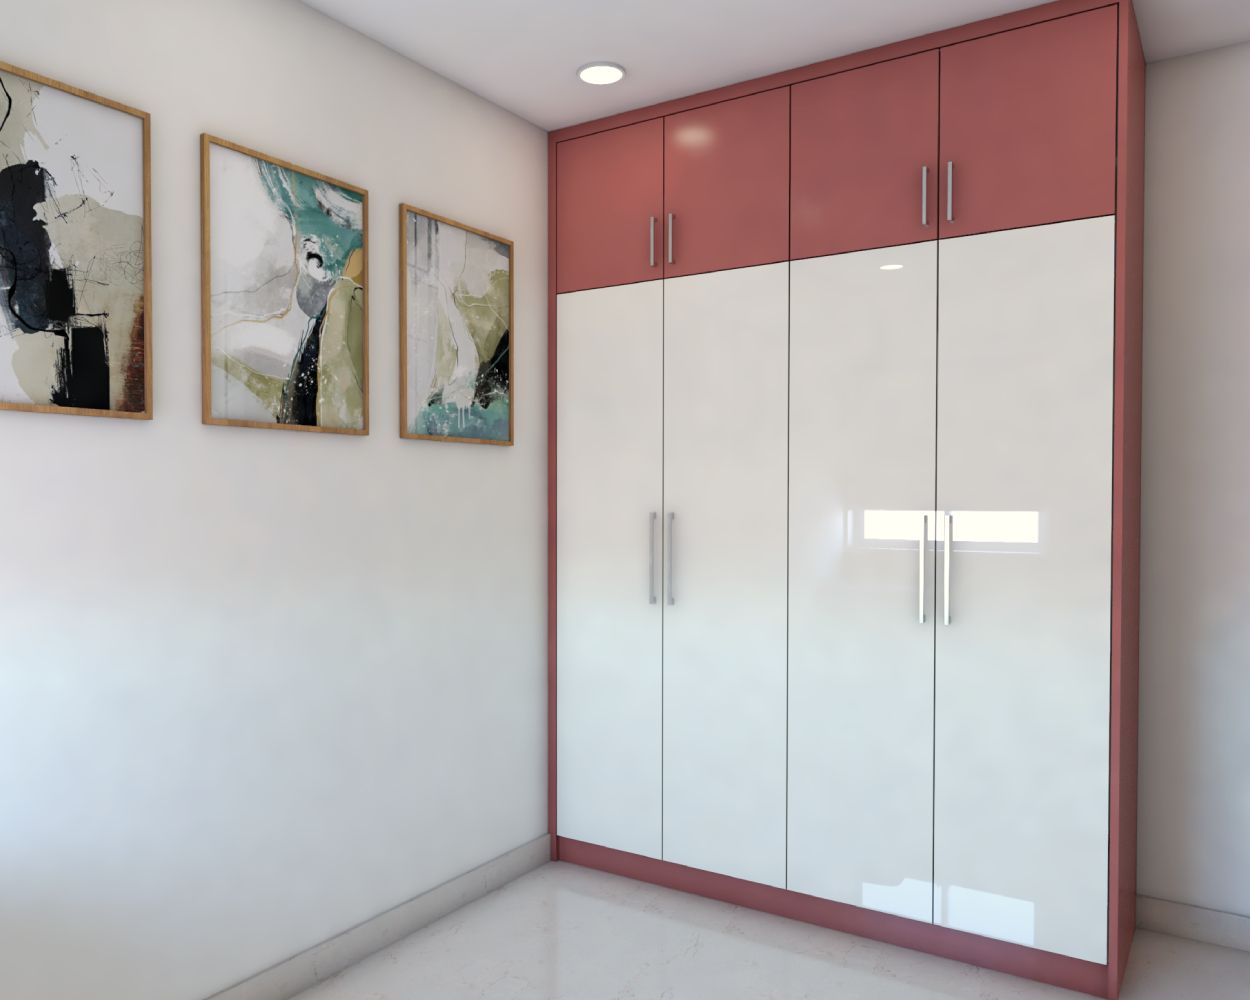 Modern 4-Door Swing Wardrobe Design In Poppy And White Tones